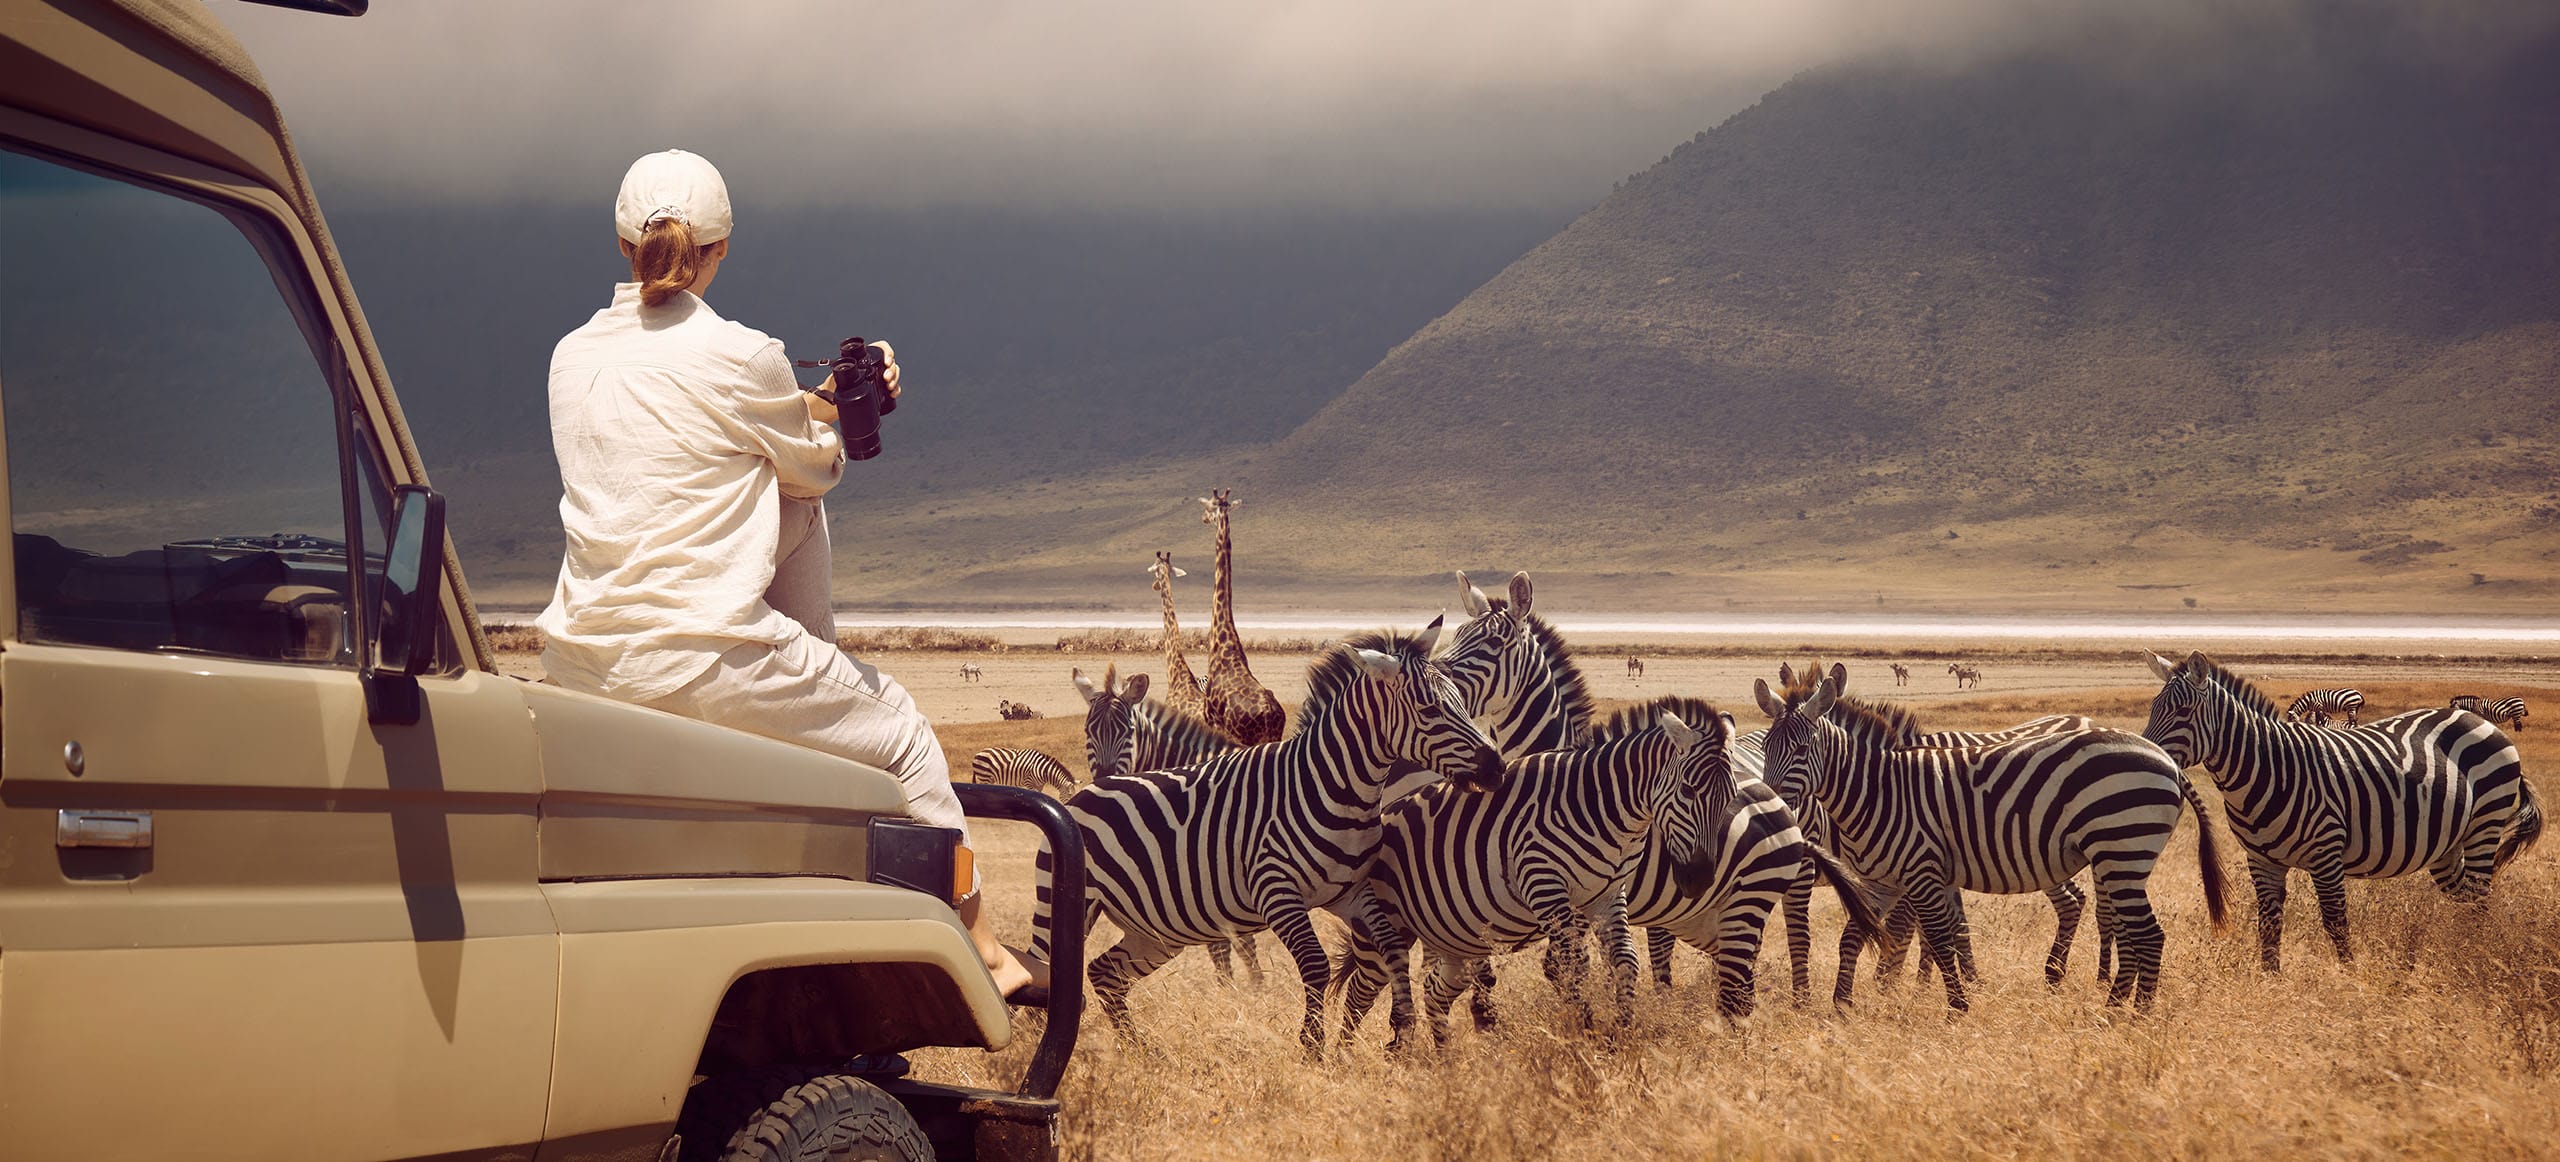 Tukio Afrika Reiseanbieter vor Zebraherde